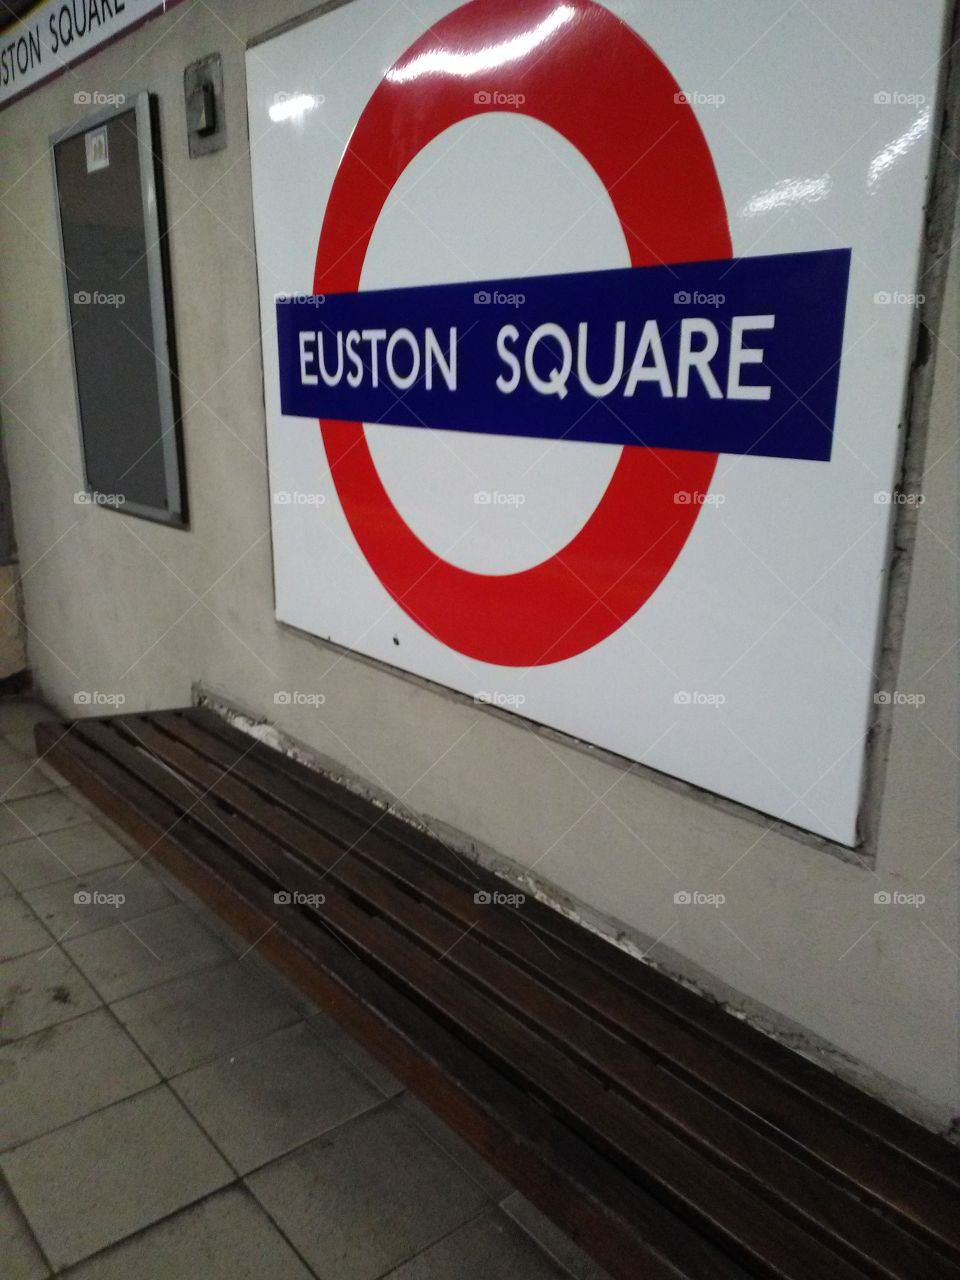 Euston square